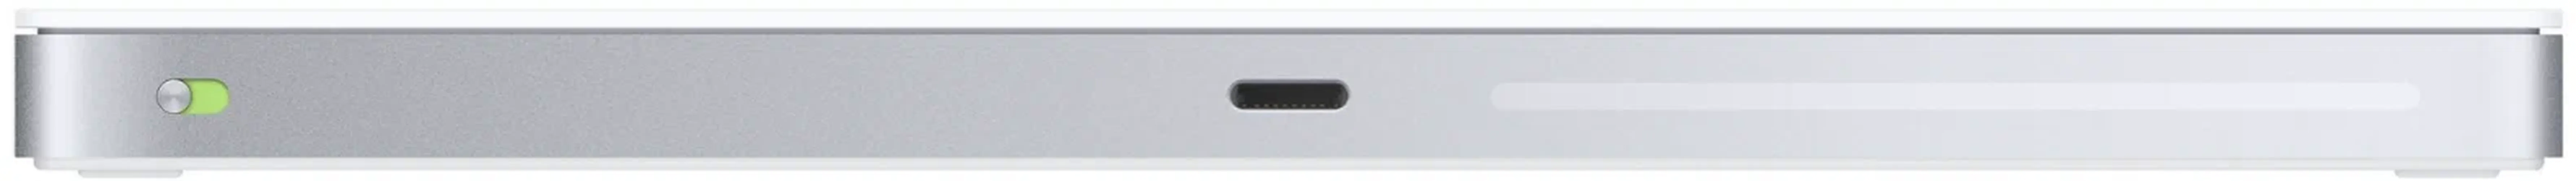 Трекпад Apple Magic Trackpad 3, Серебристый